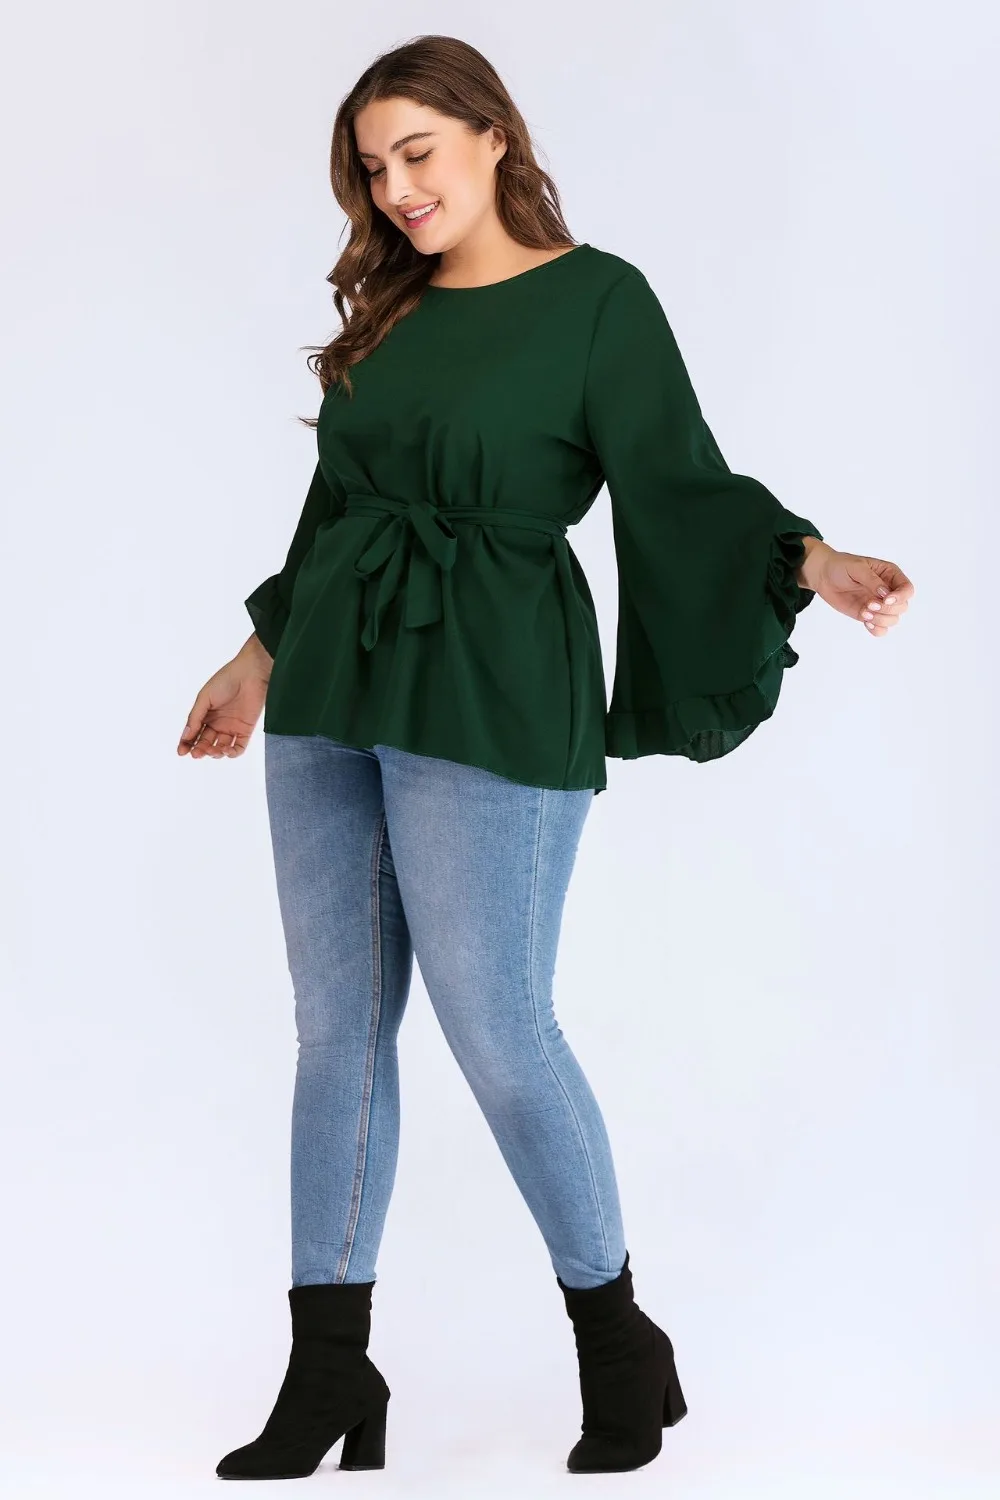 new autumn winter plus size tops for women long sleeve large cotton O neck casual loose T shirt belt green 4XL 5XL 6XL 7XL